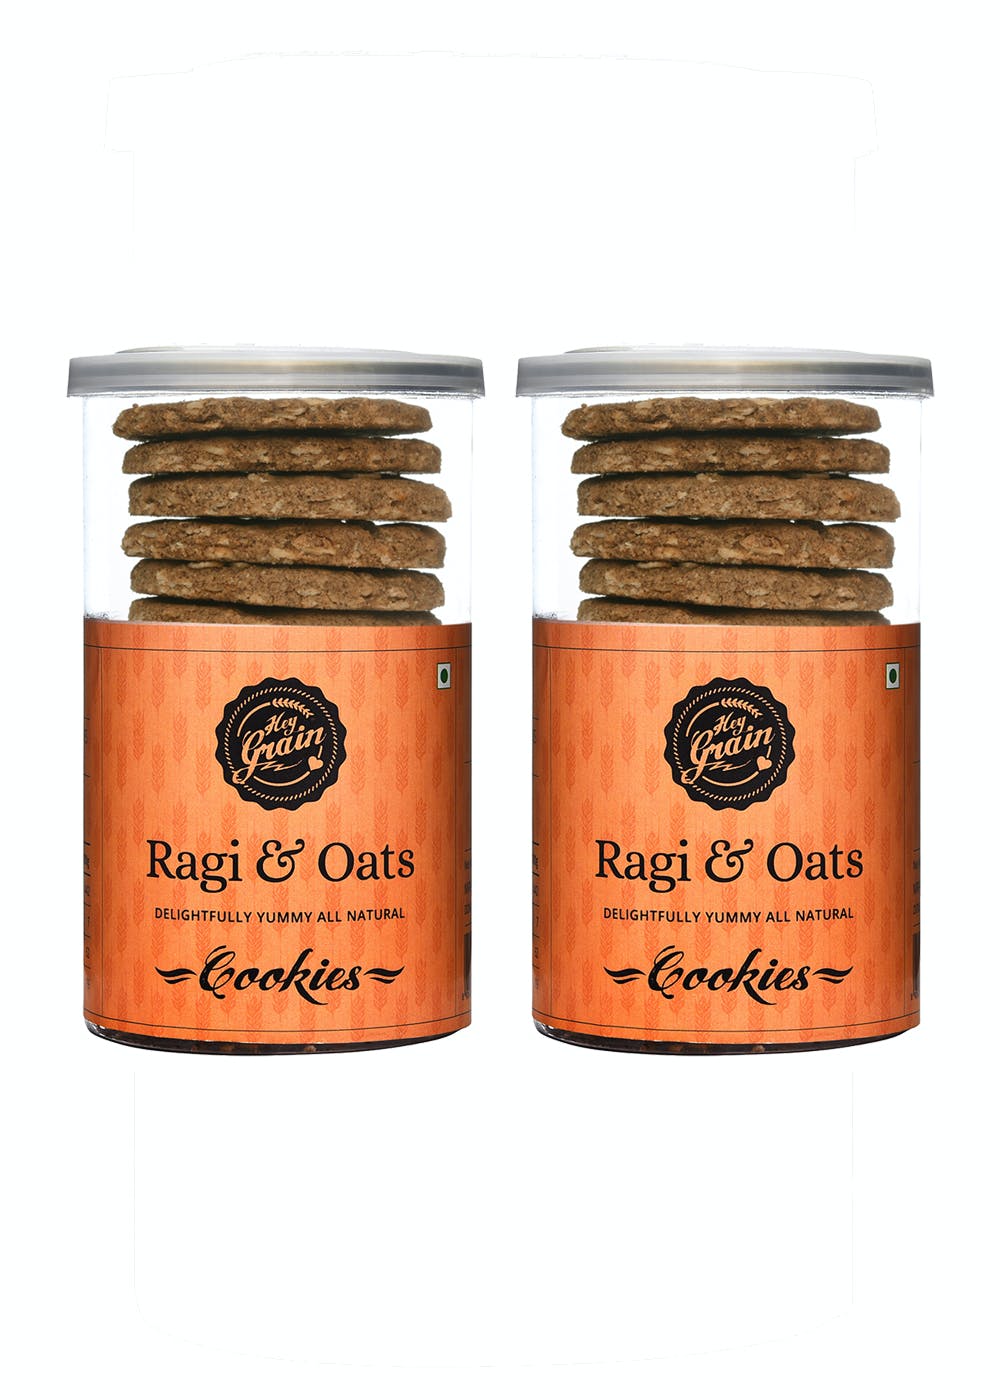 Ragi & Oats Cookies - 160gms - Pack of 2